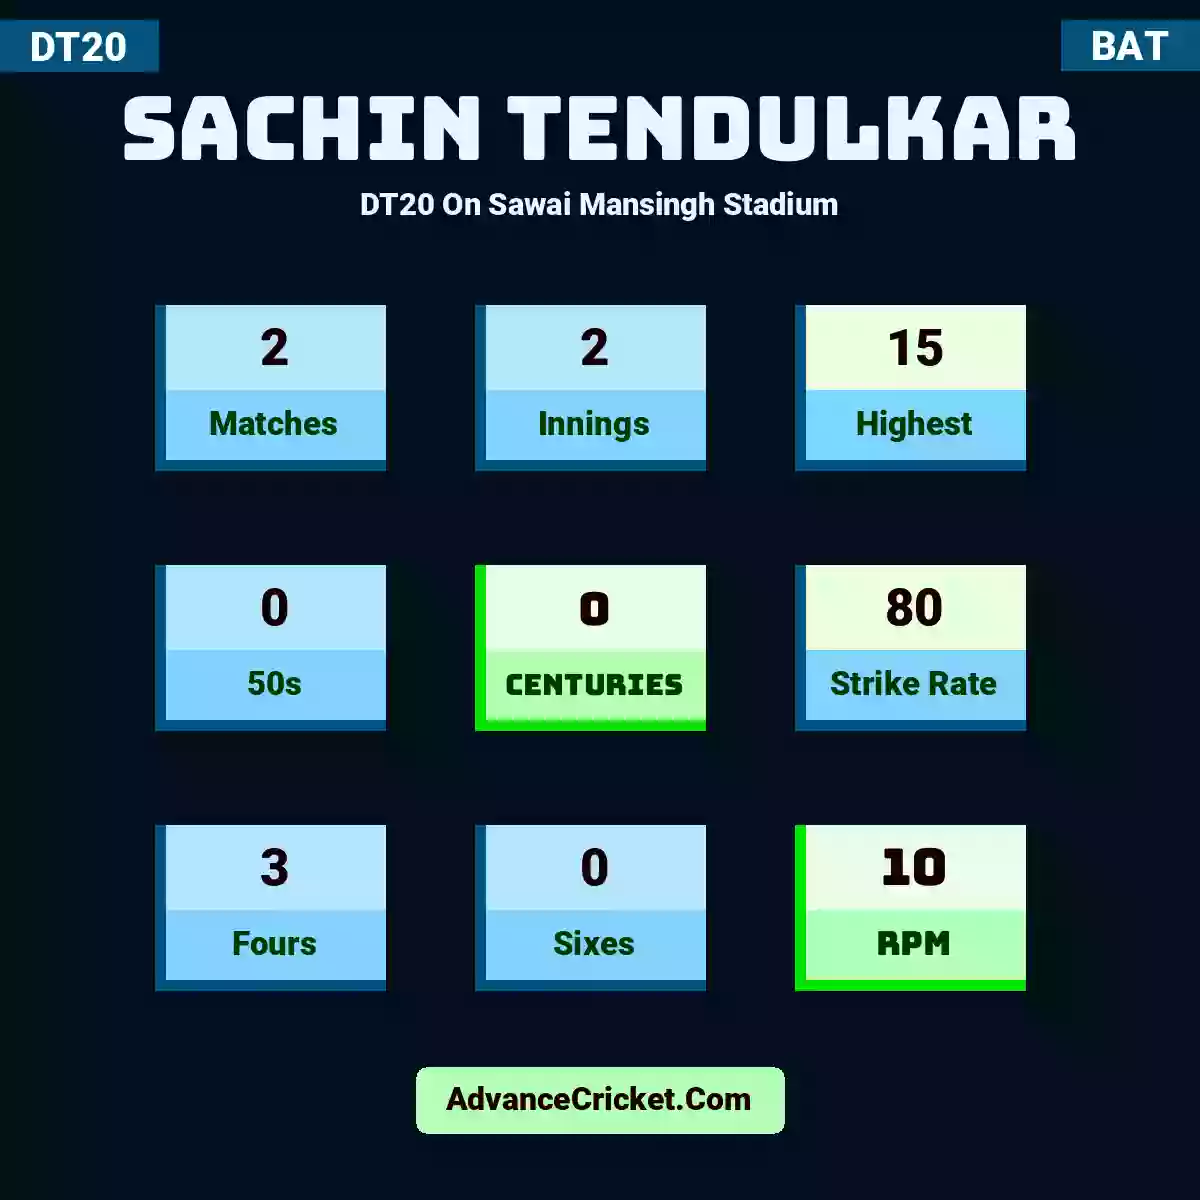 Sachin Tendulkar DT20  On Sawai Mansingh Stadium, Sachin Tendulkar played 2 matches, scored 15 runs as highest, 0 half-centuries, and 0 centuries, with a strike rate of 80. S.Tendulkar hit 3 fours and 0 sixes, with an RPM of 10.